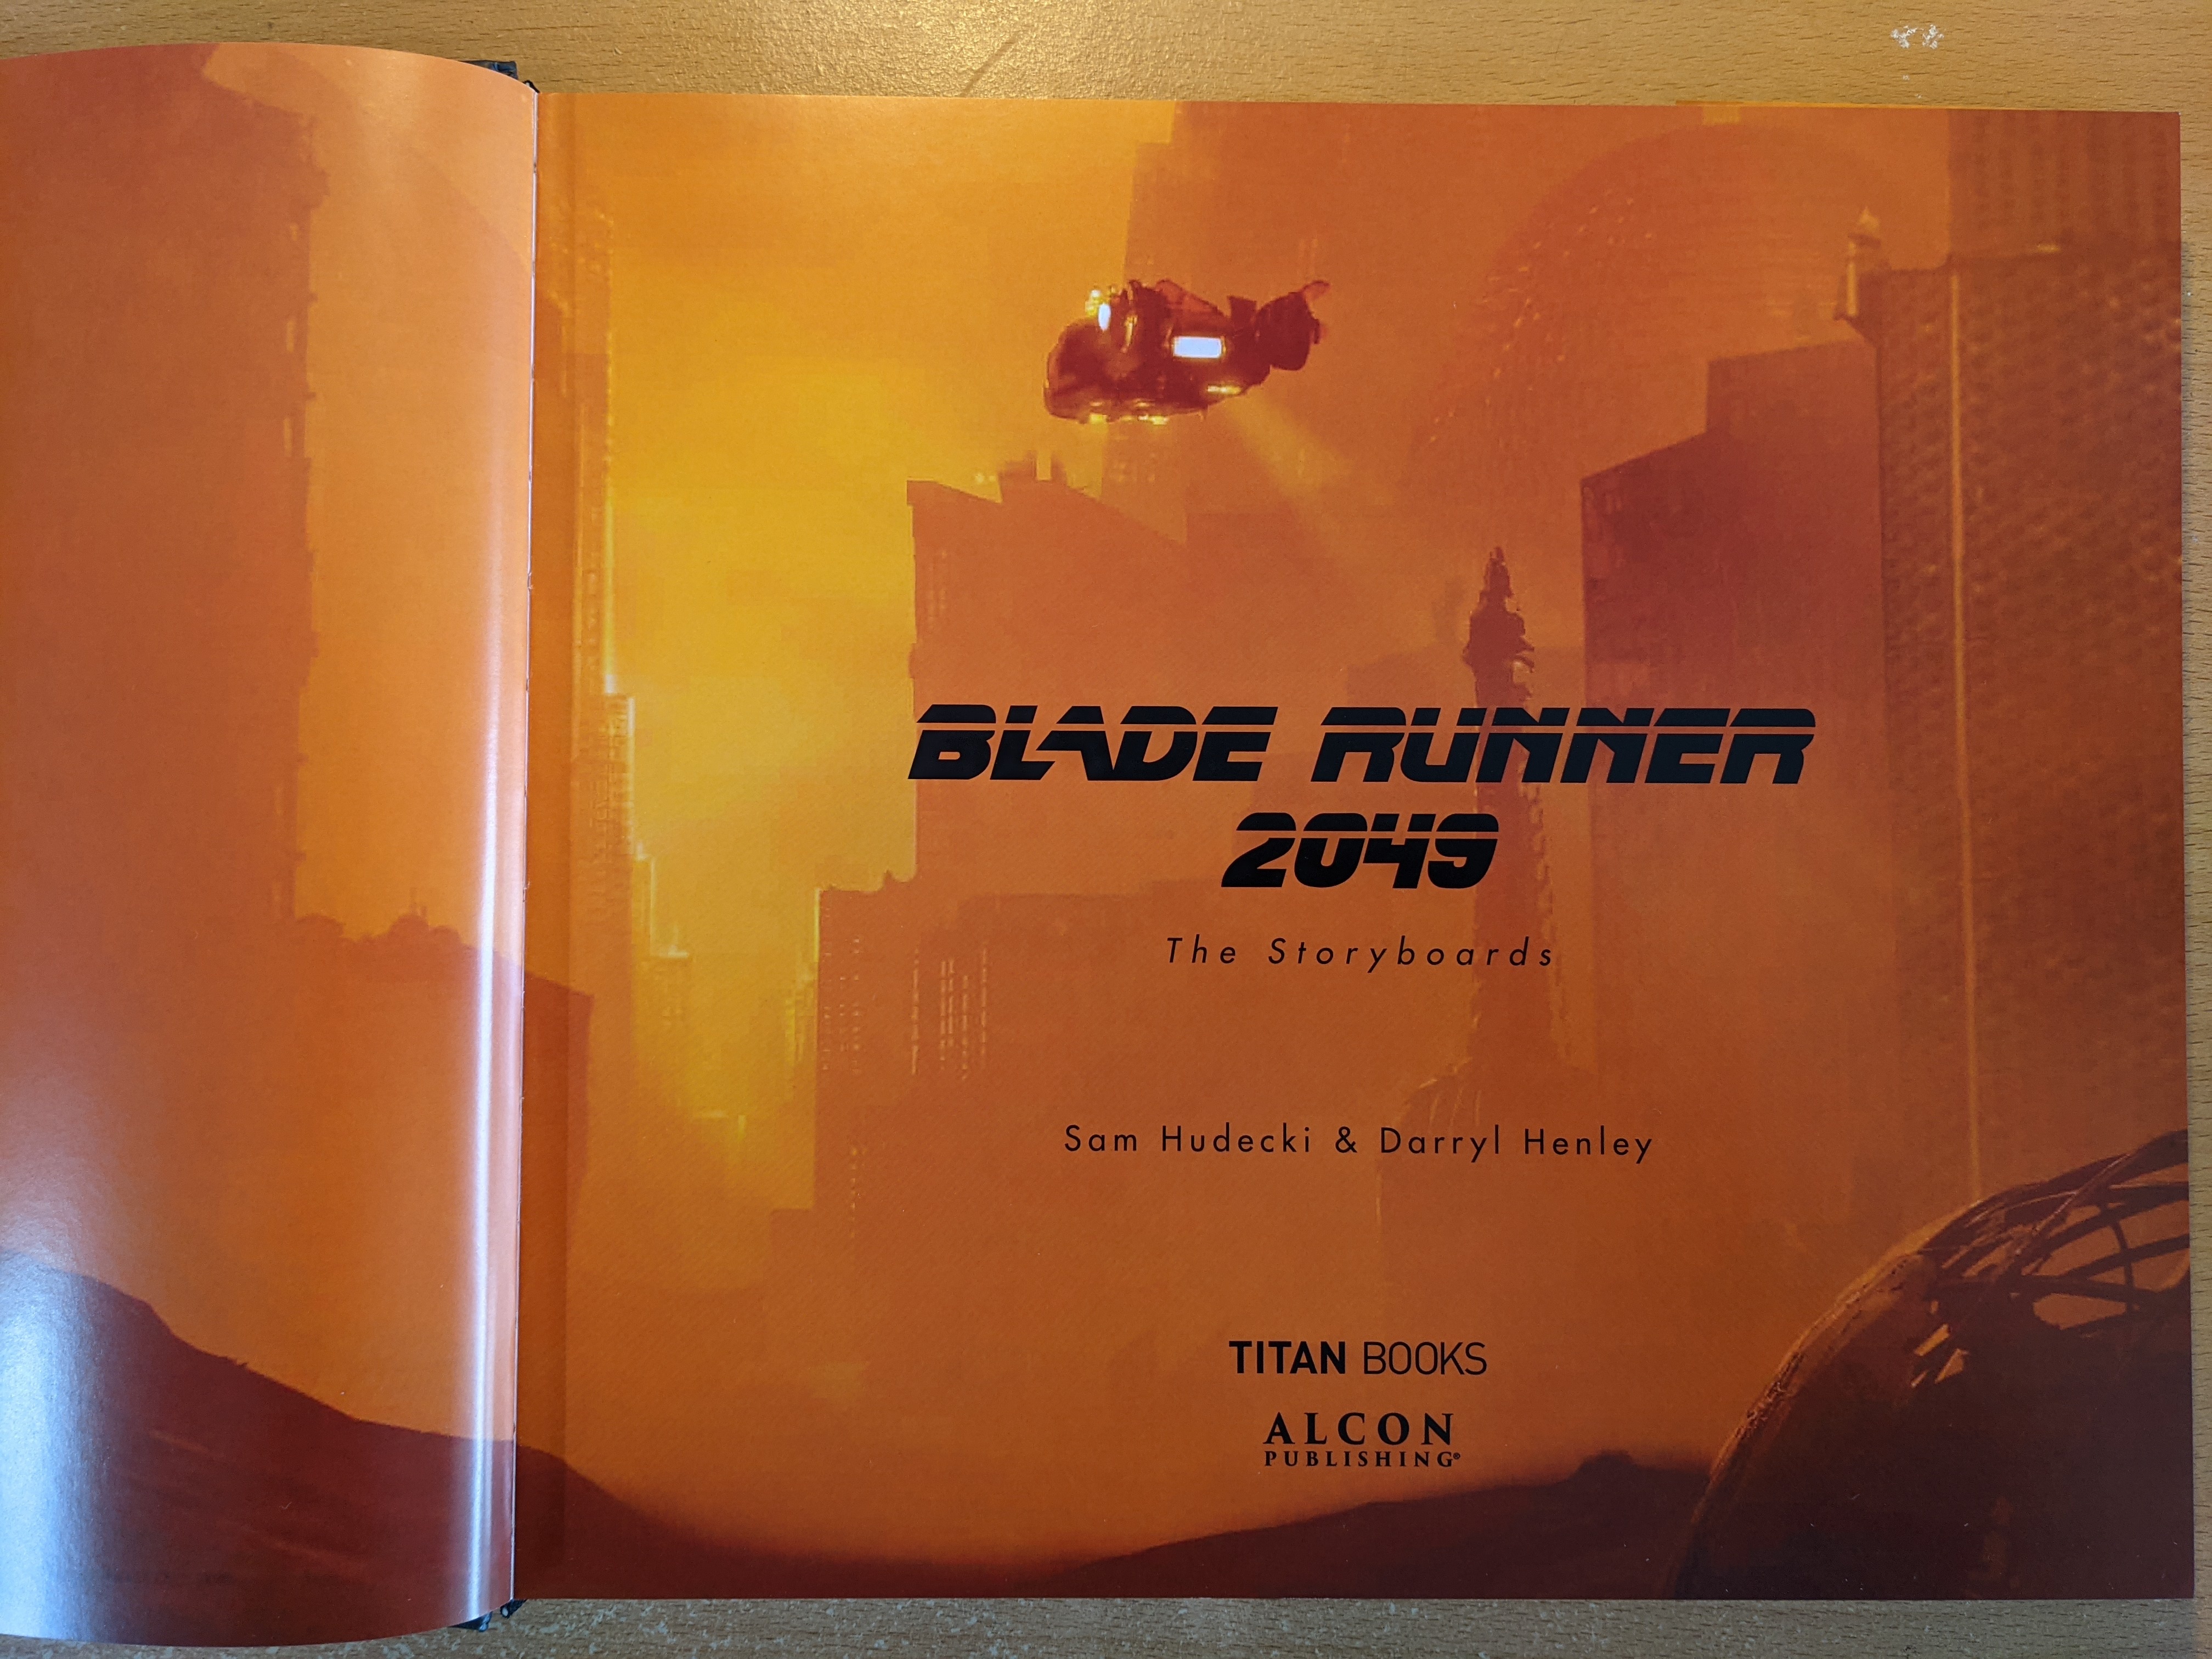 Blade-Runner-2049-The-Storyboards-inside-cover